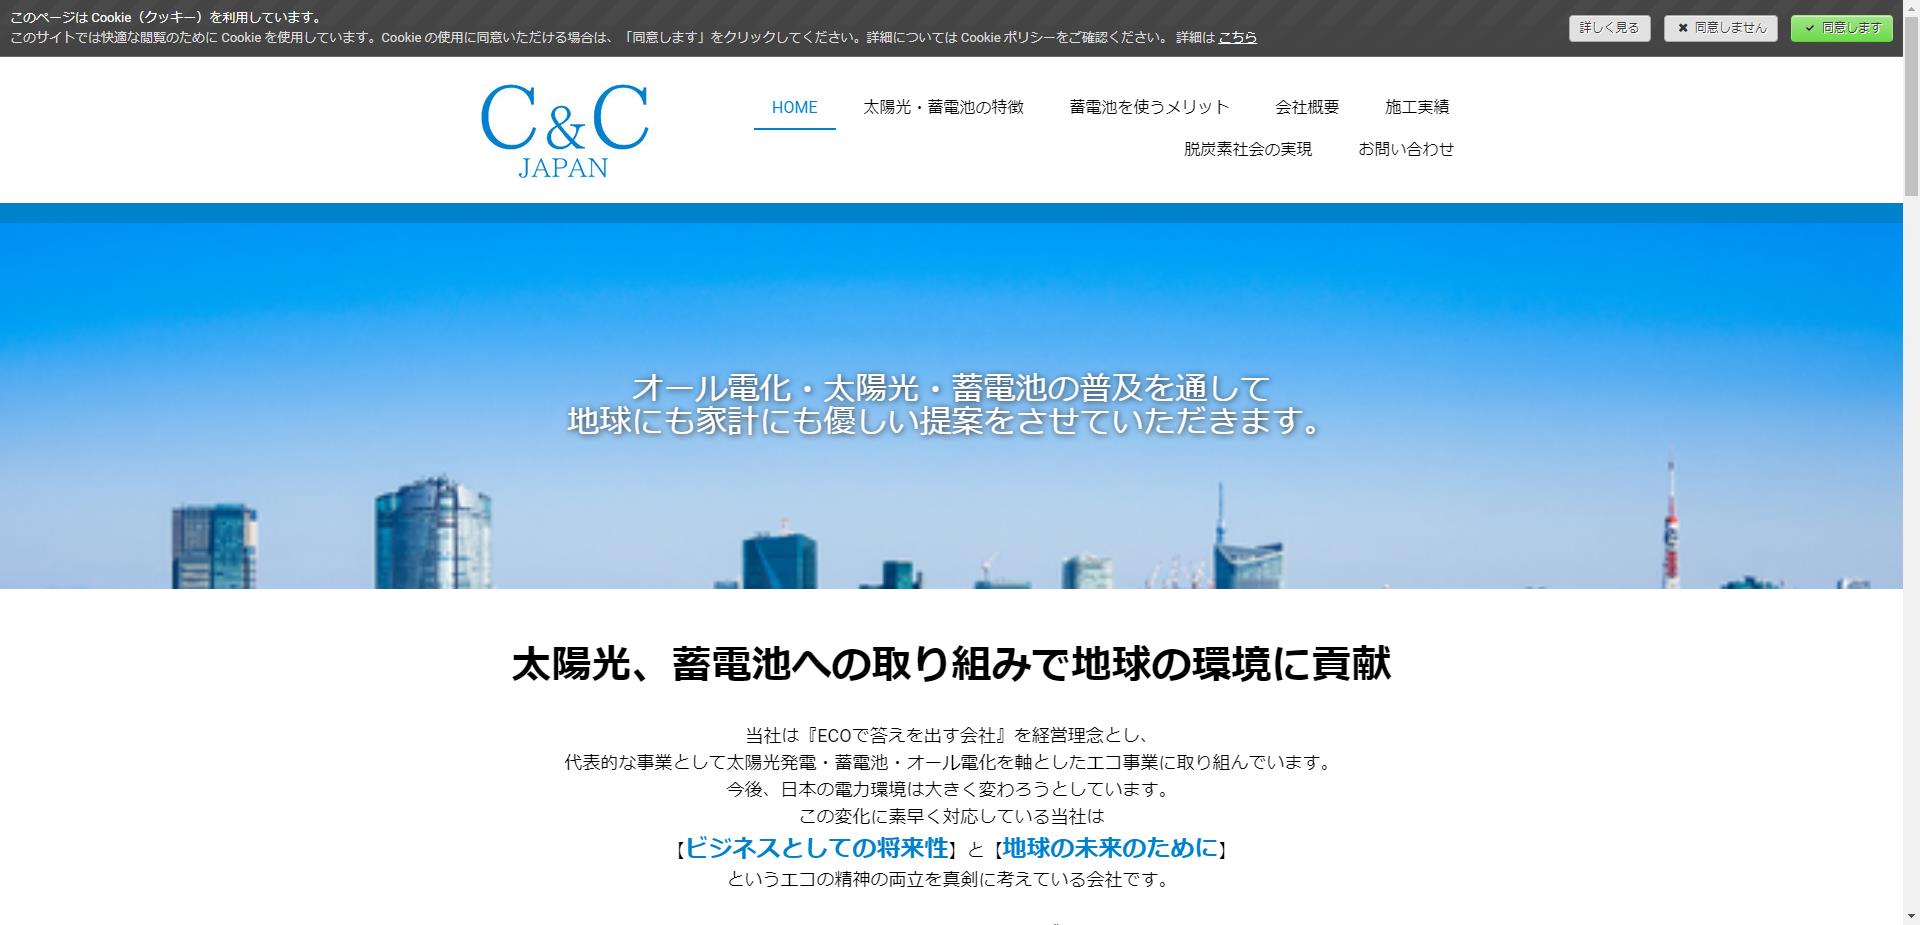 株式会社C&C JAPAN